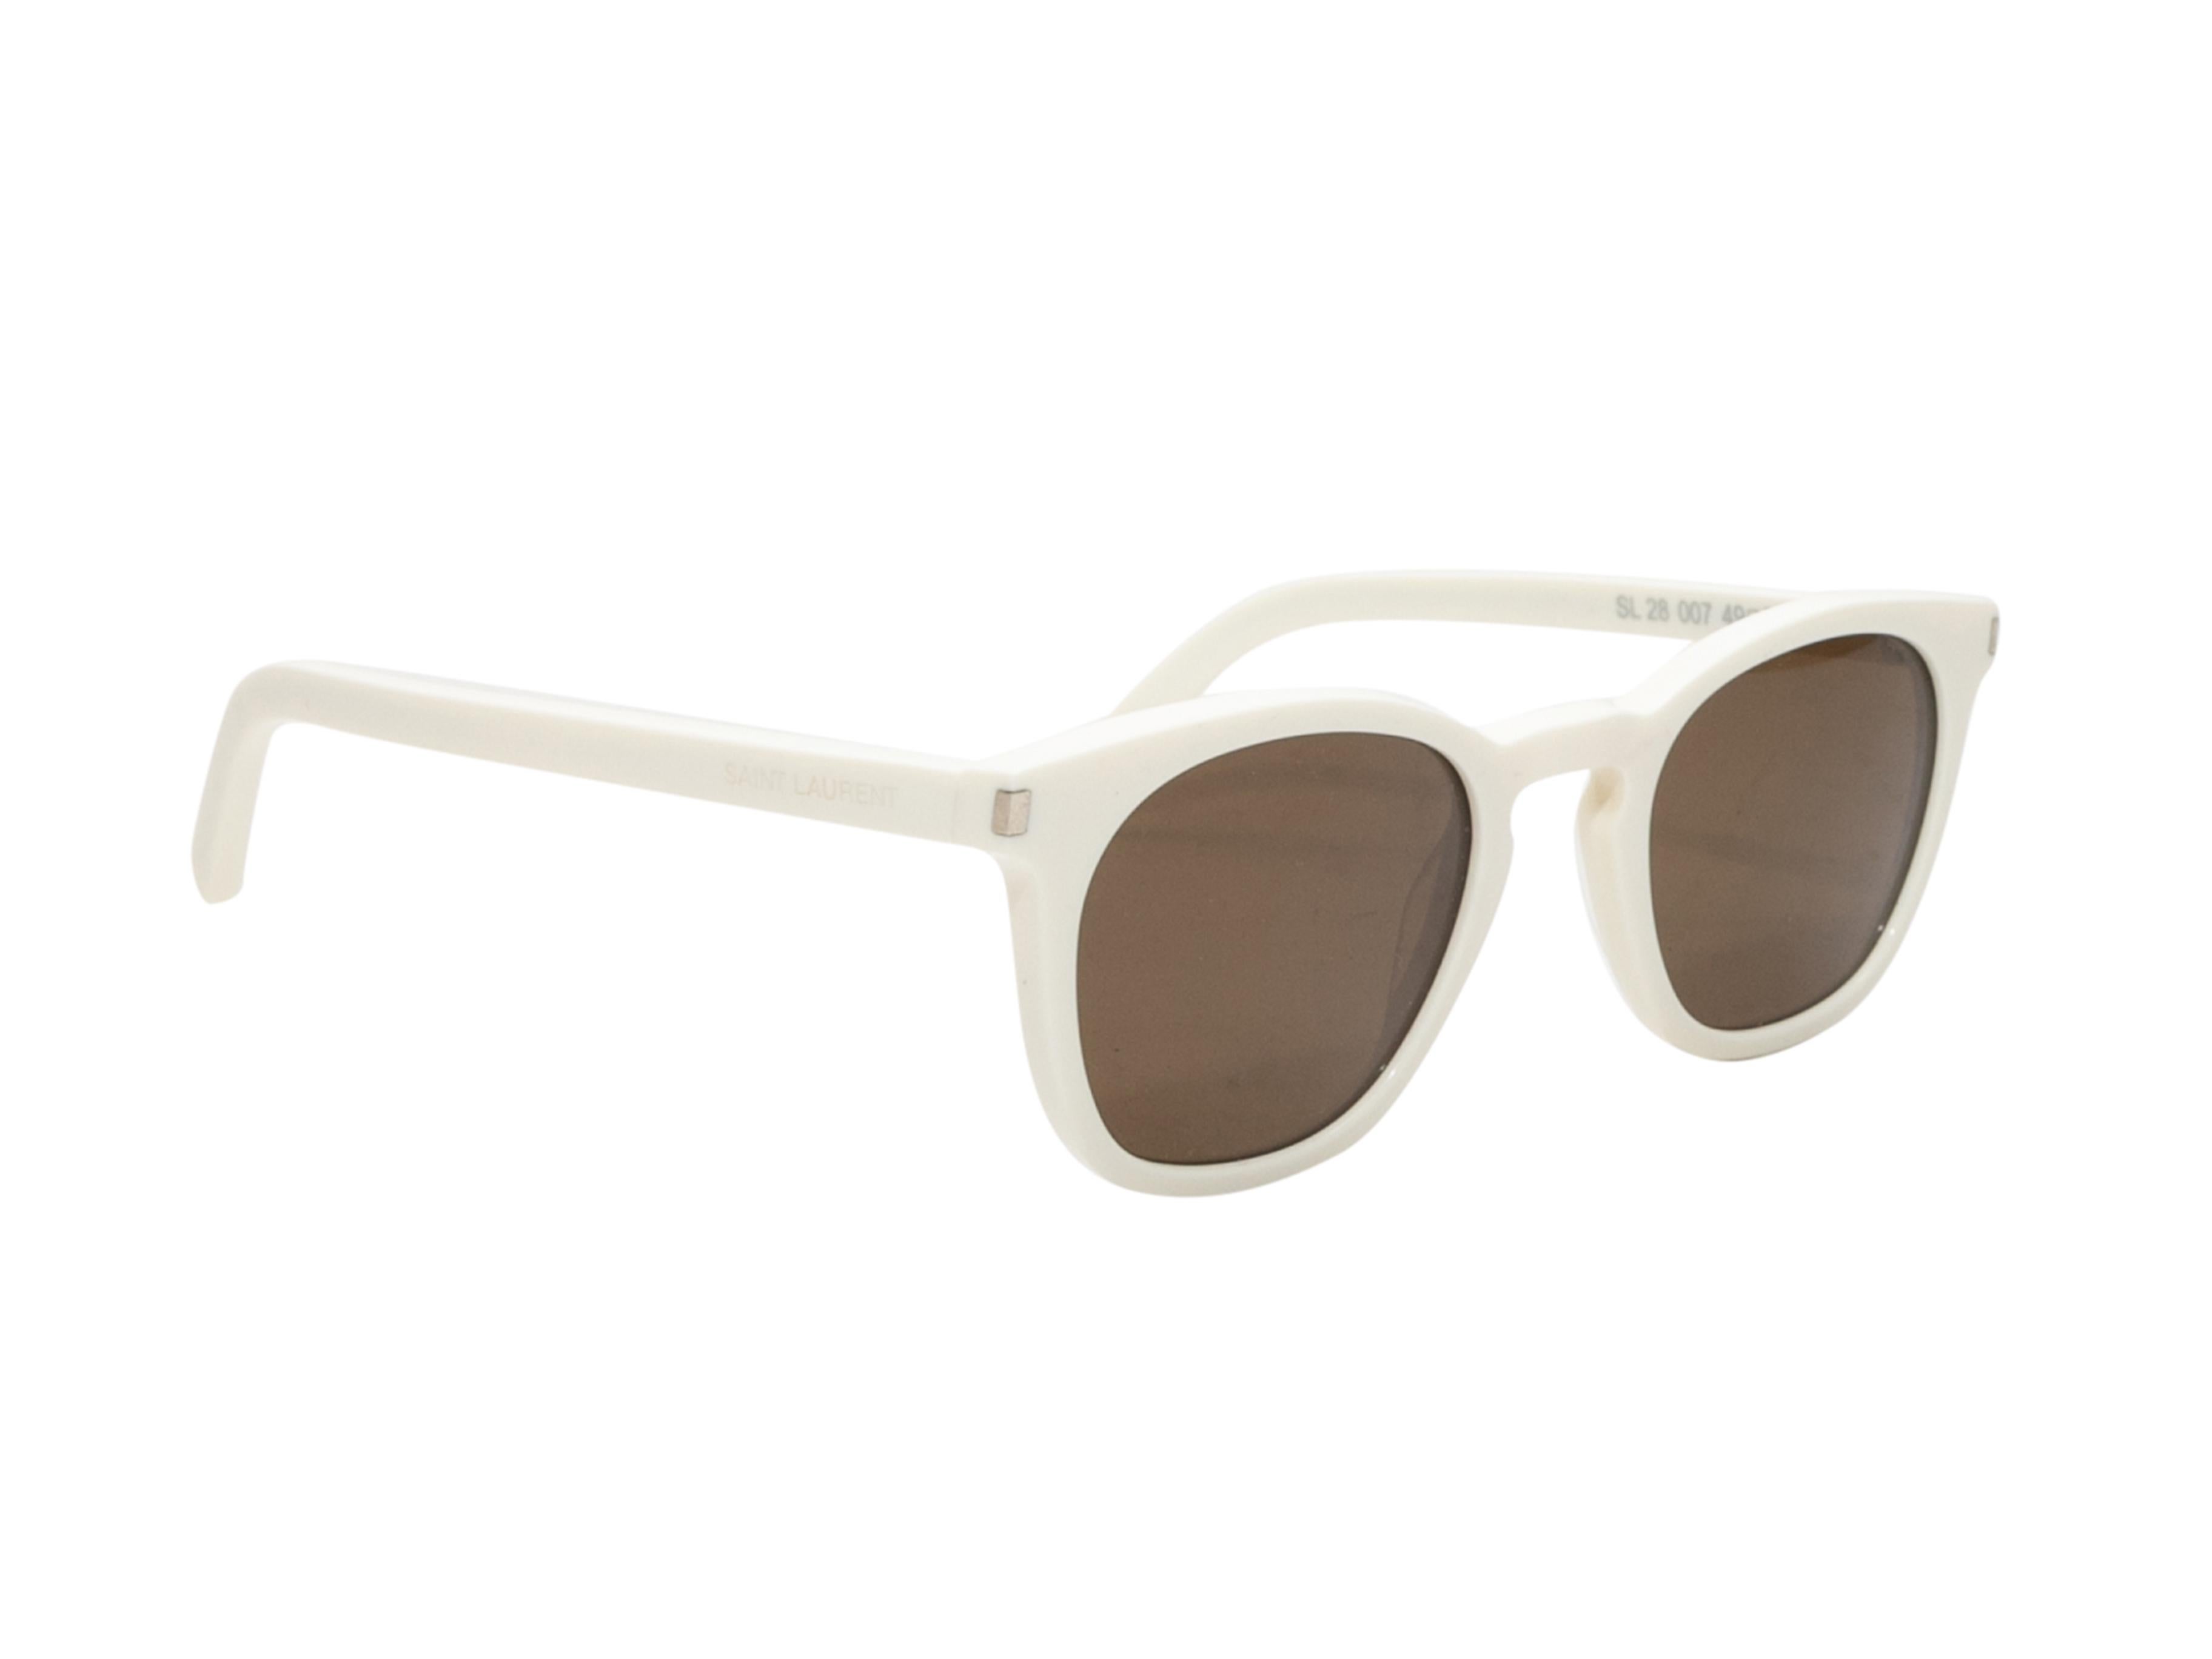 White acetate wayfarer sunglasses by Saint Laurent. Brown tinted lenses. 1.5